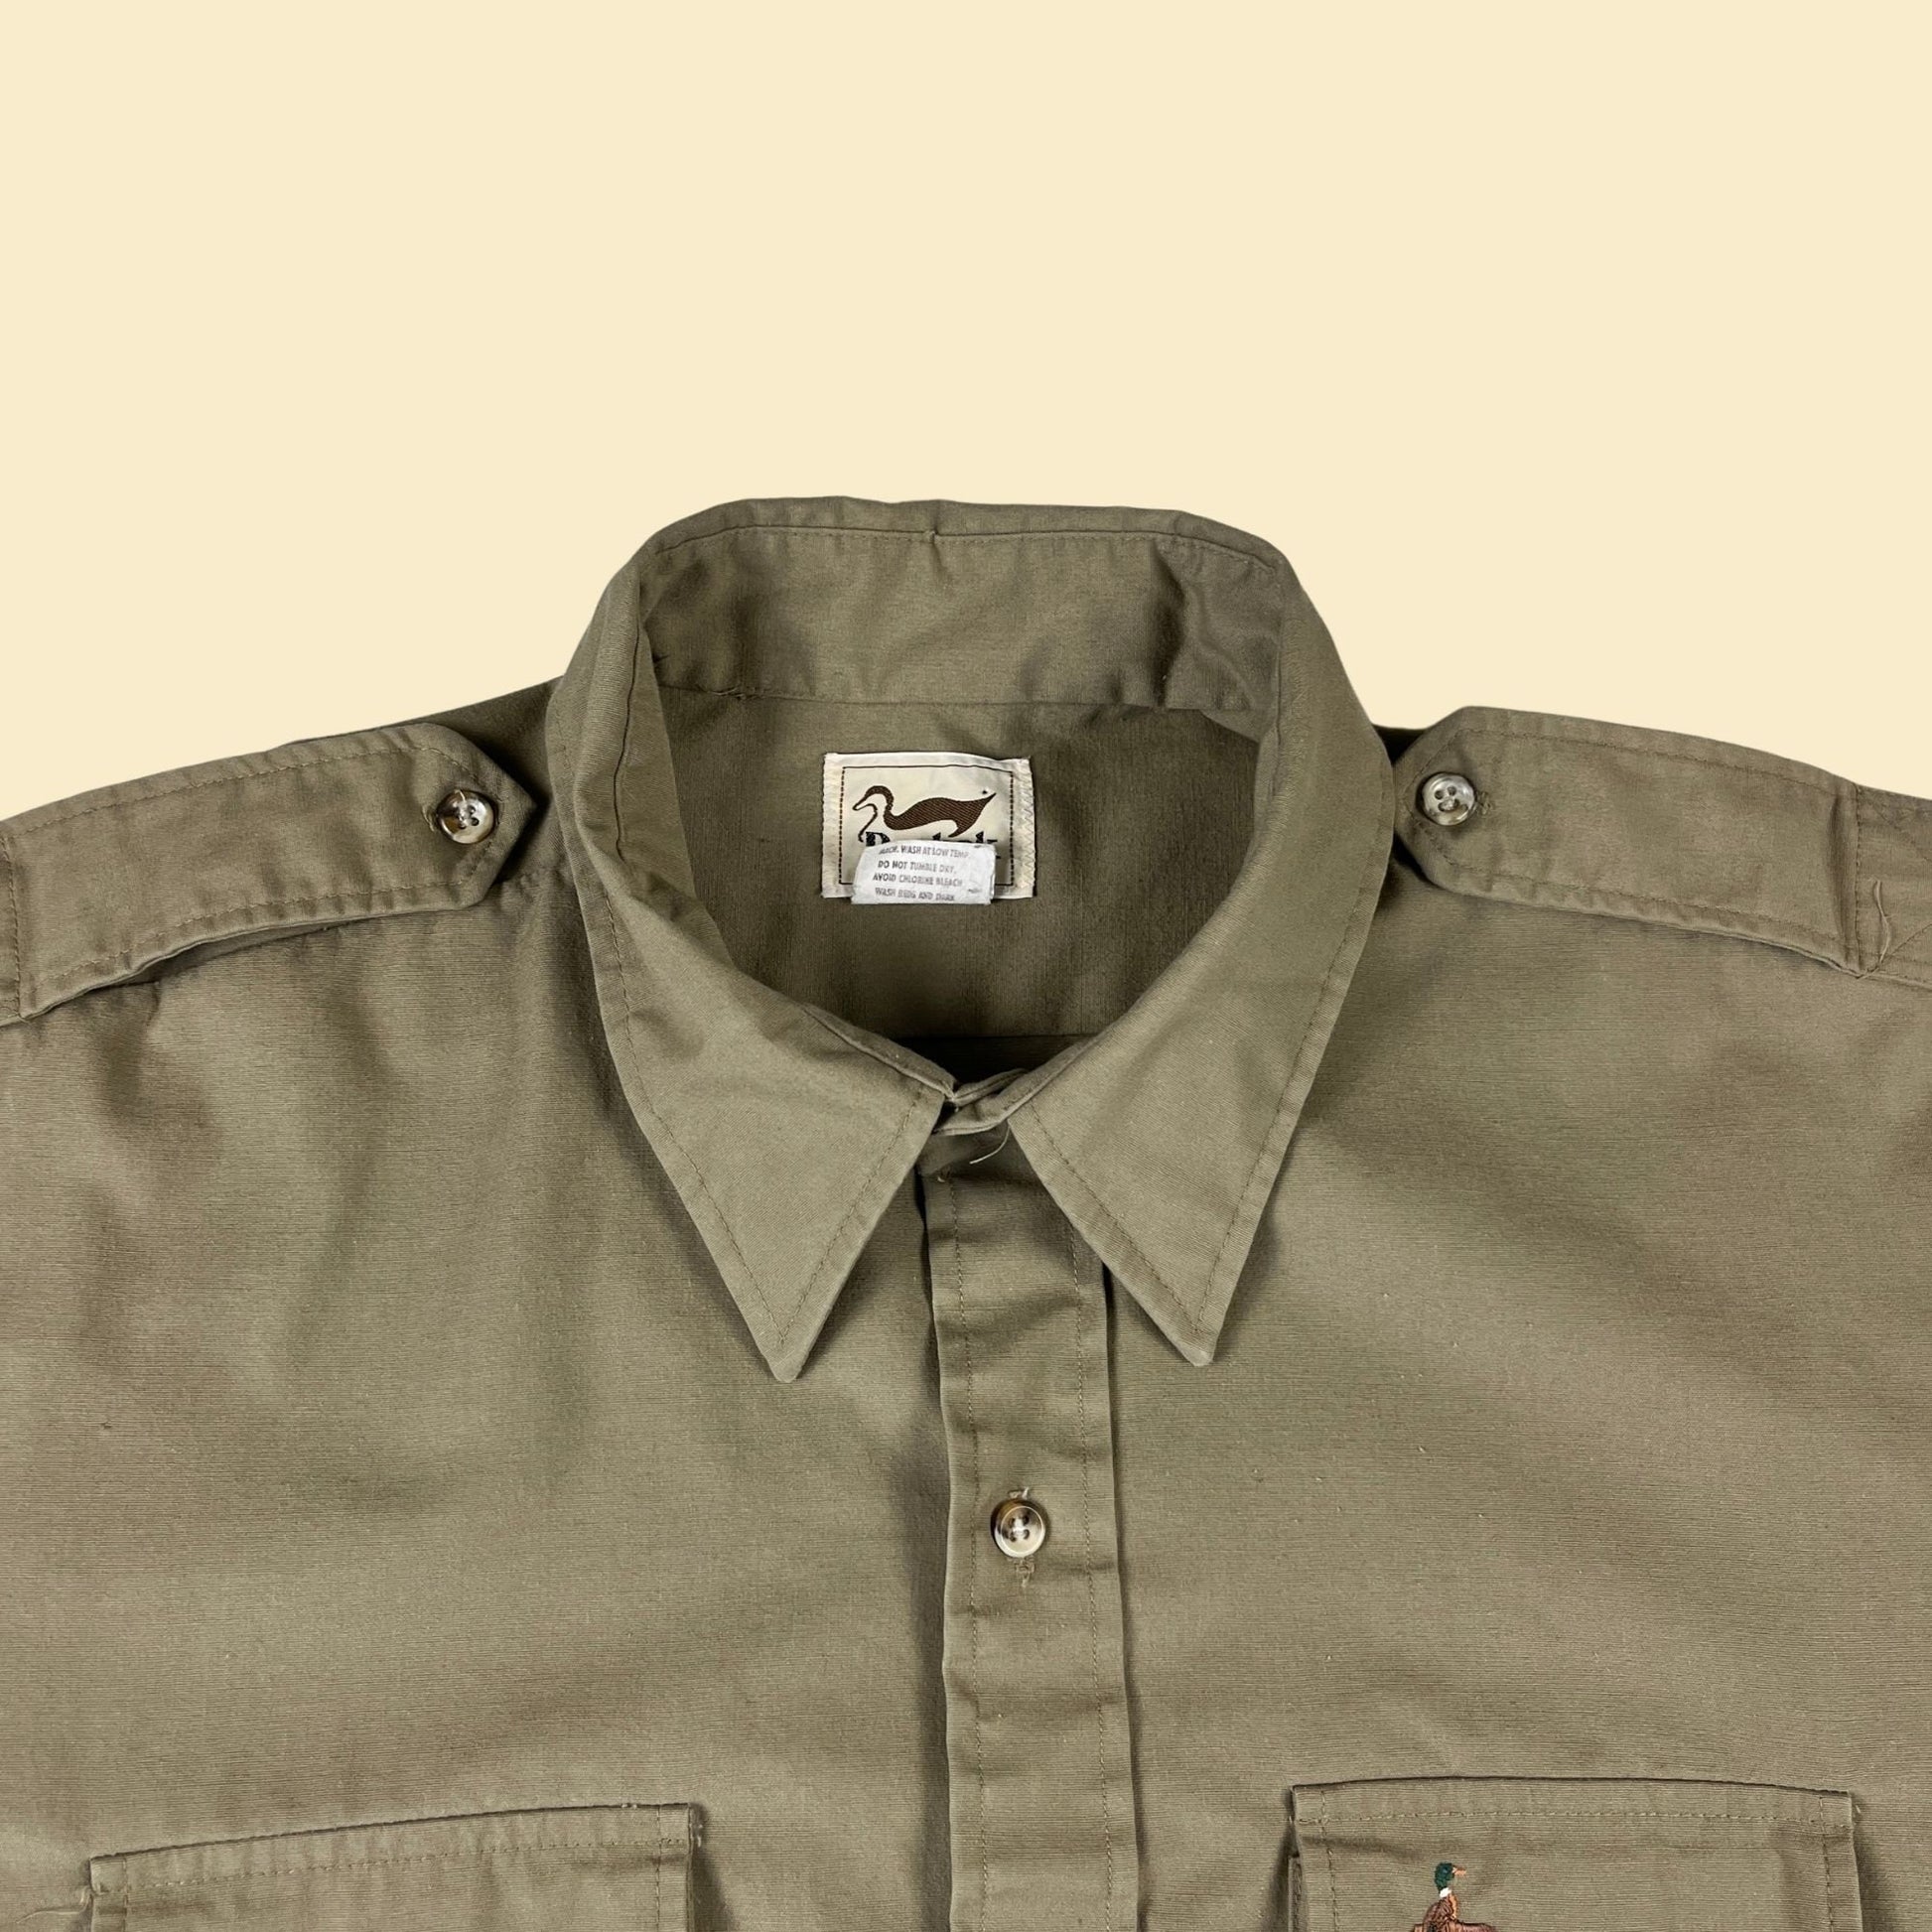 80s khaki XL men's shirt by Duxbak, vintage button down beige long sleeve shirt w/ duck logo, 1980s men's outdoors button down